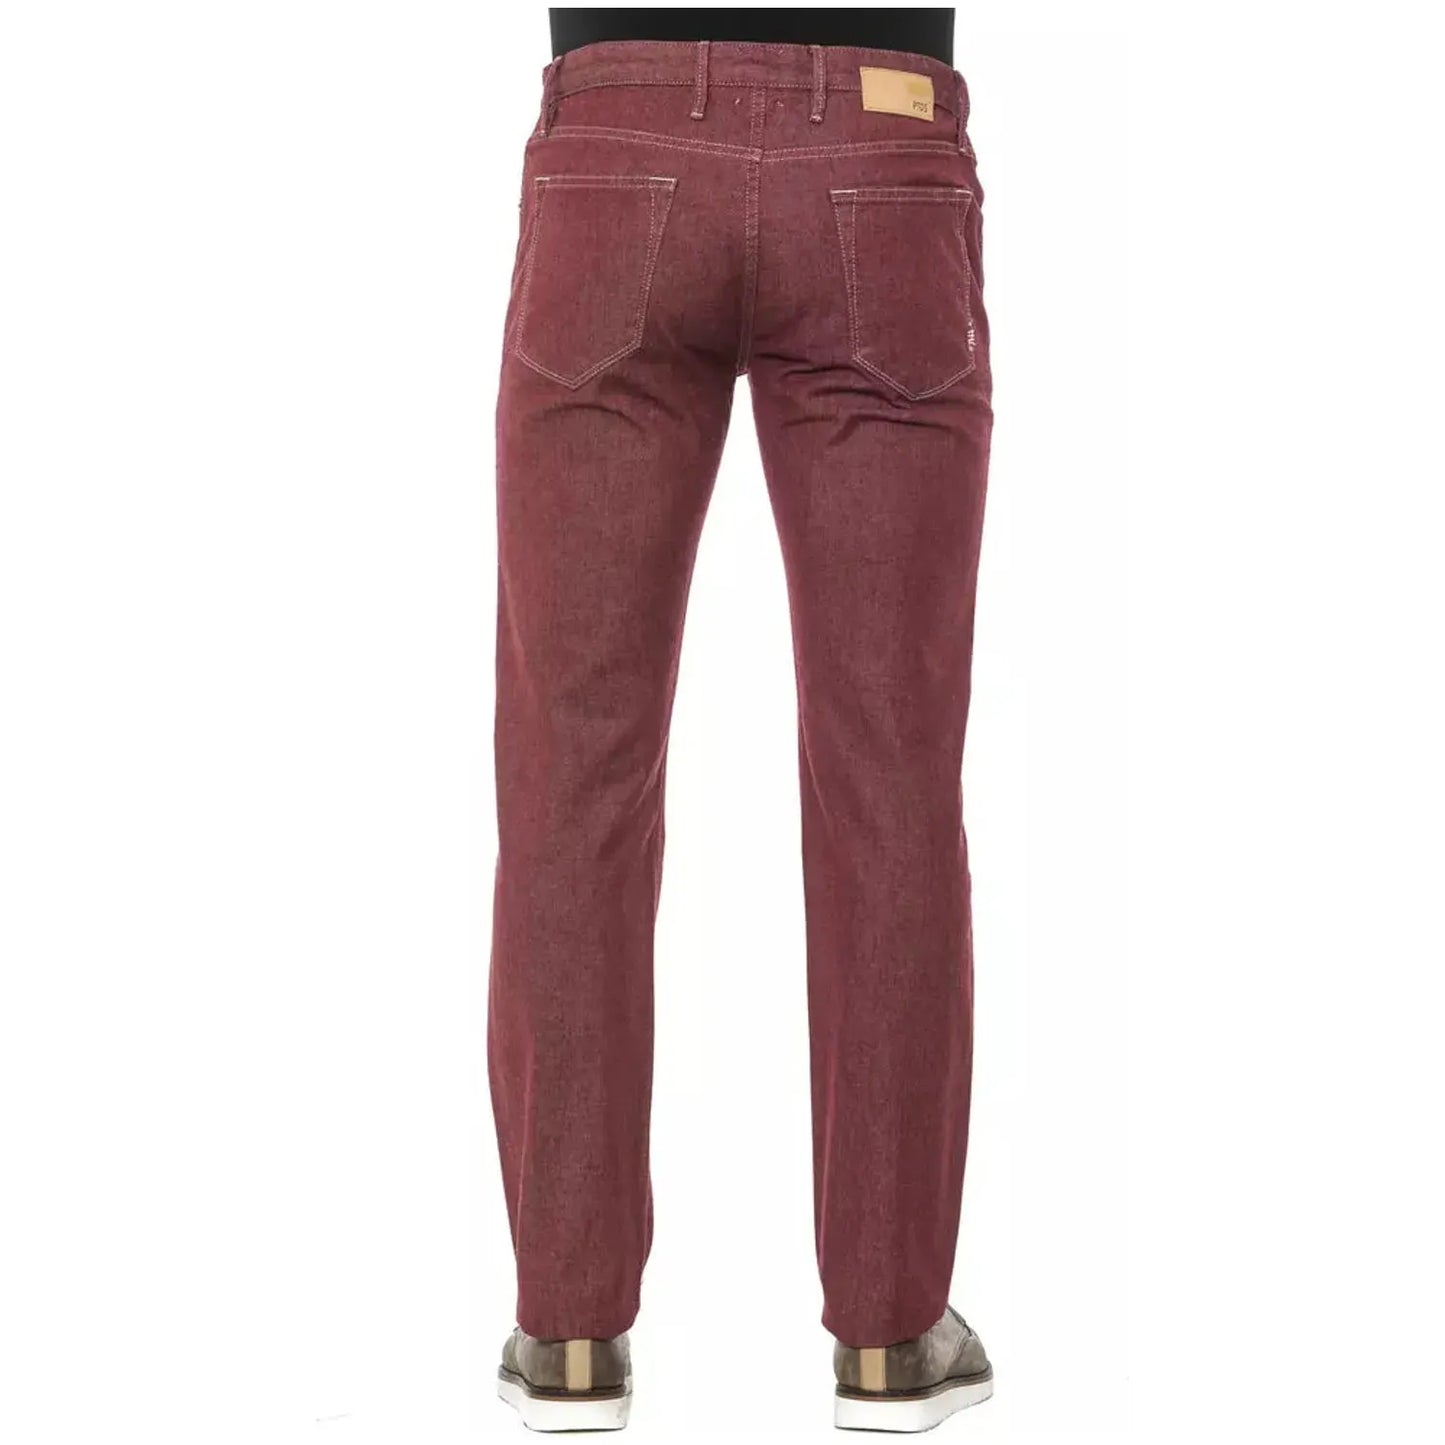 PT Torino Elegant Super Slim Burgundy Trousers burgundy-cotton-jeans-pant-4